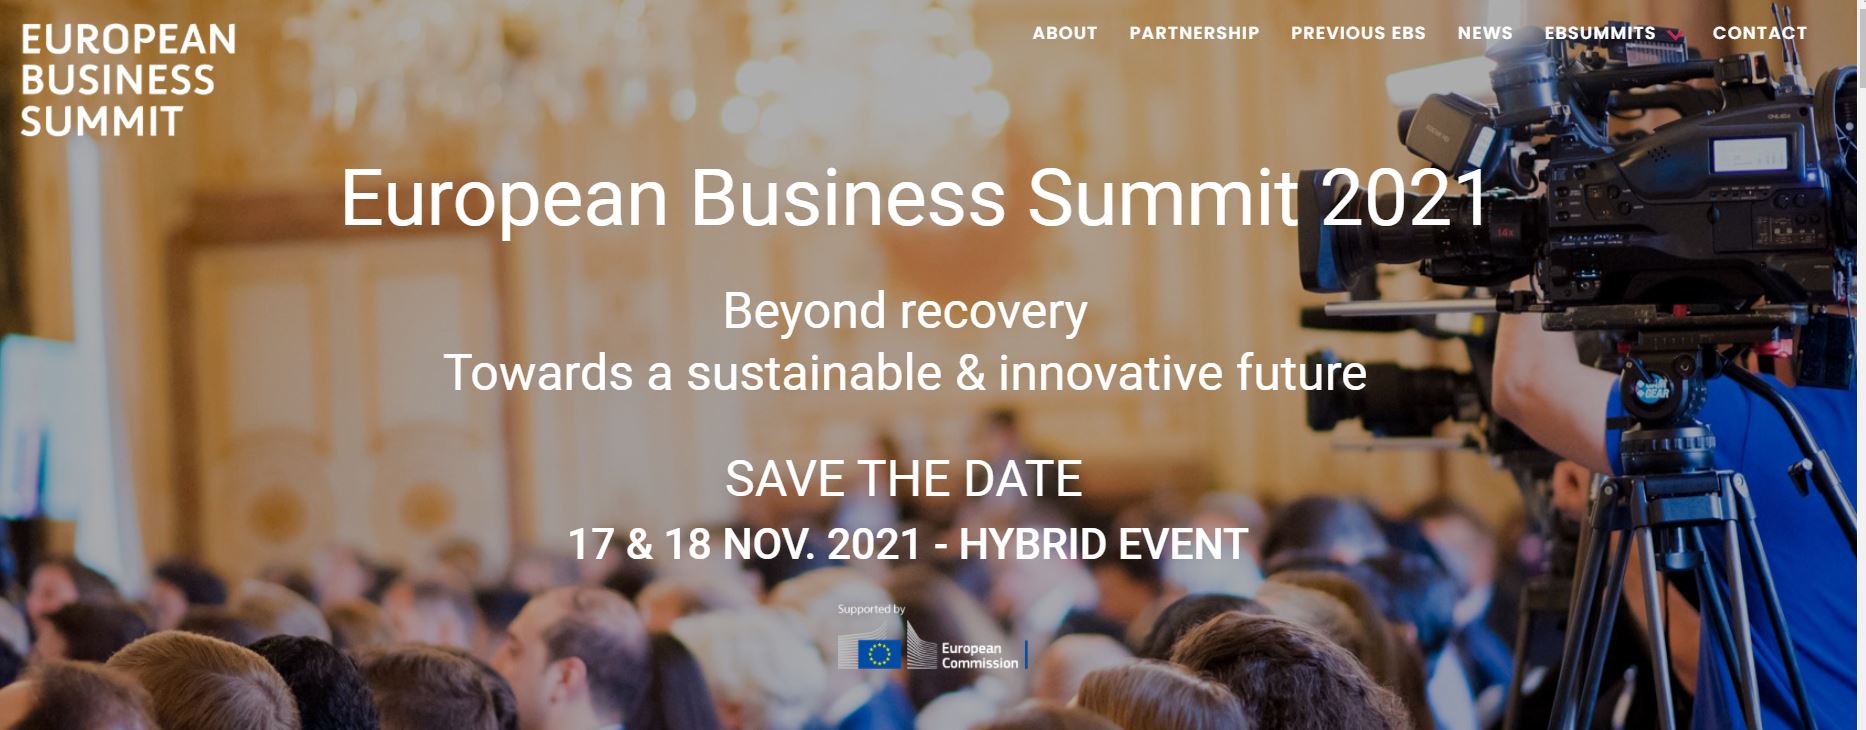 European Business Summit 2021